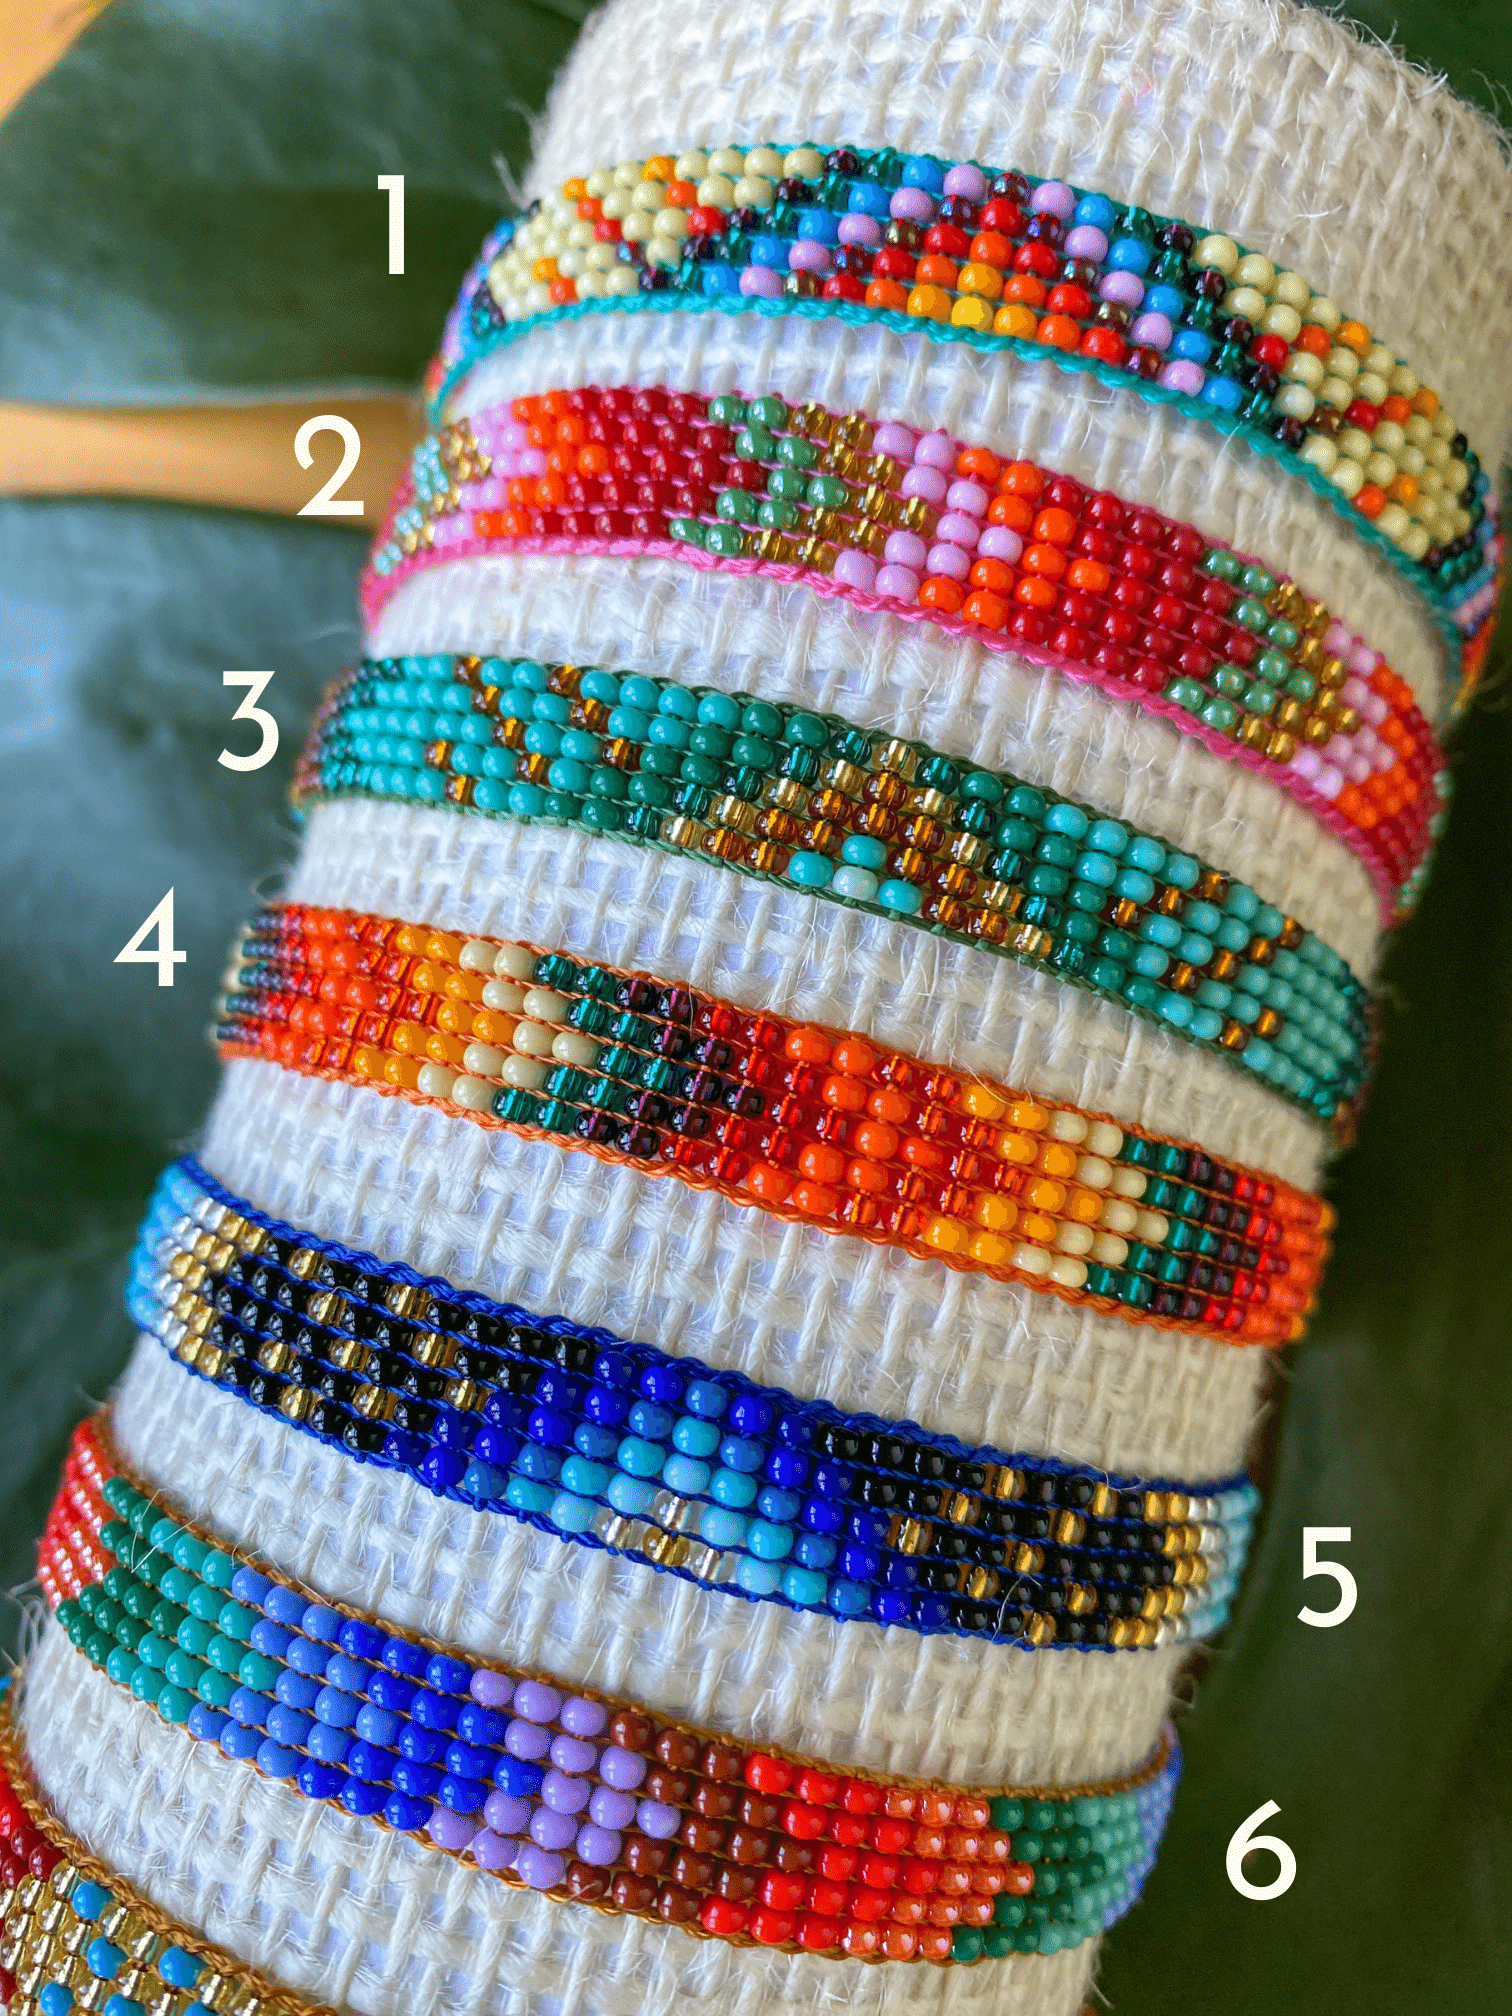 Summer Fun Bead Weaving Bracelet Kit - Beads Gone Wild